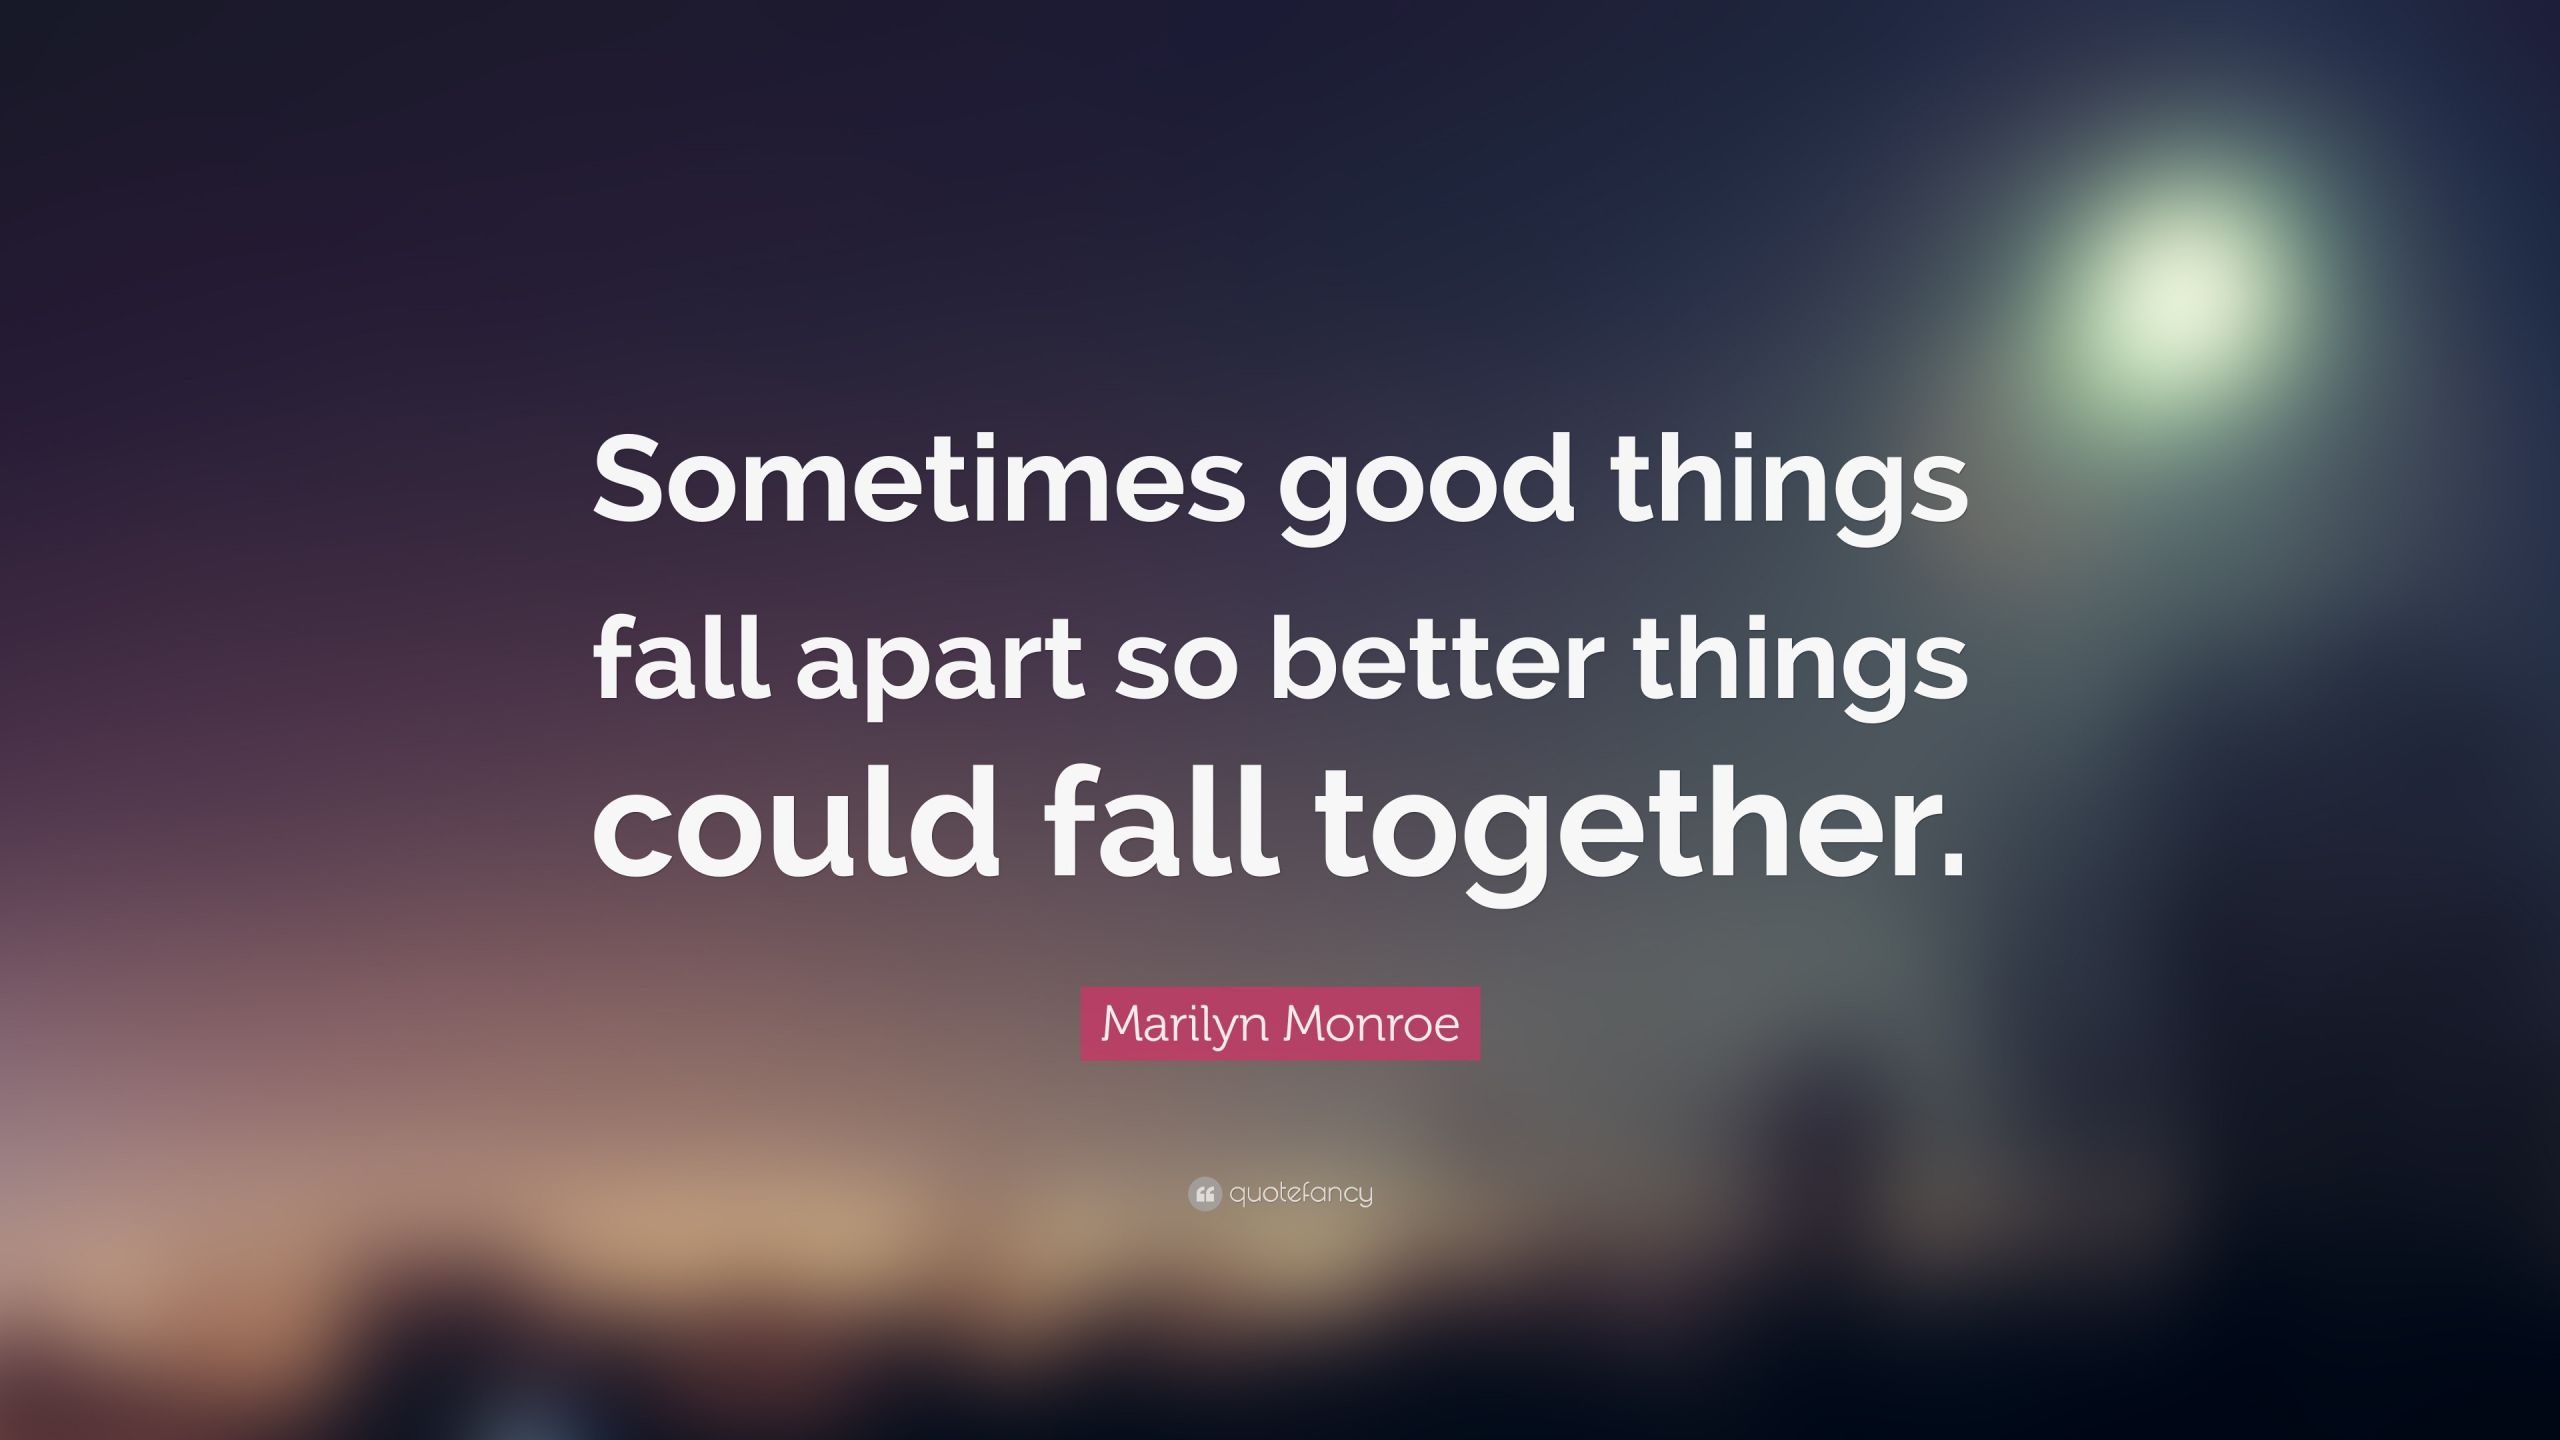 Quote Things Fall Apart
 Marilyn Monroe Quote “Sometimes good things fall apart so